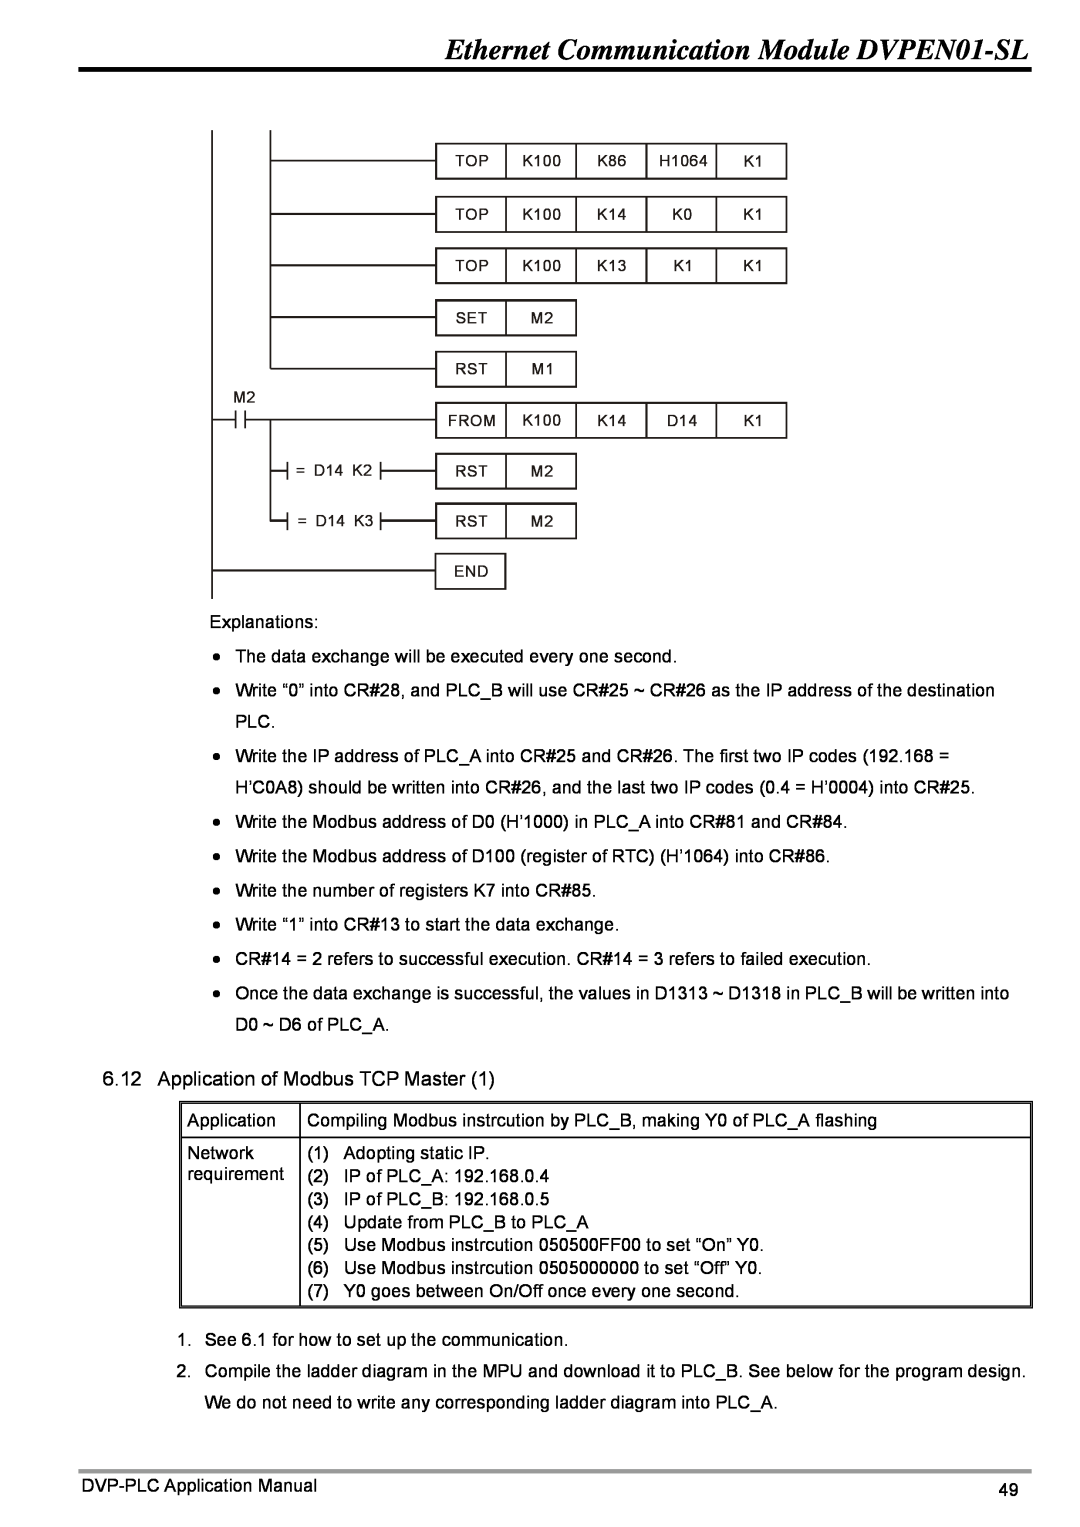 Delta Electronics manual Ethernet Communication Module DVPEN01-SL, Application of Modbus TCP Master 